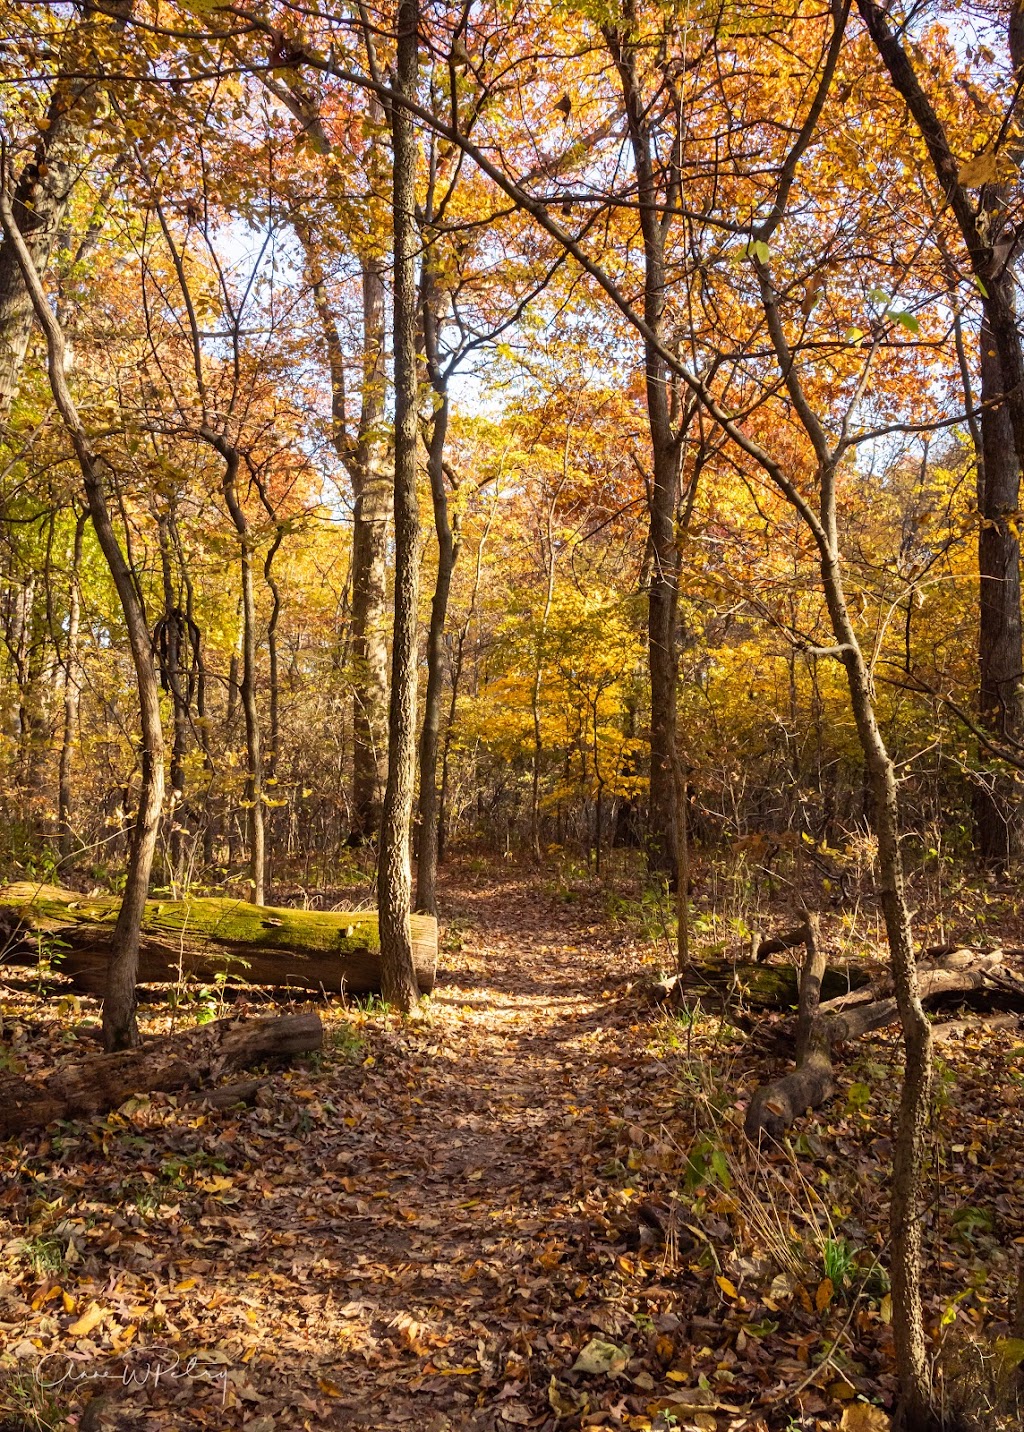 Julius J Knobeloch Woods Nature Preserve | 3018 Rentchler Rd, Belleville, IL 62221, USA | Phone: (618) 295-2877